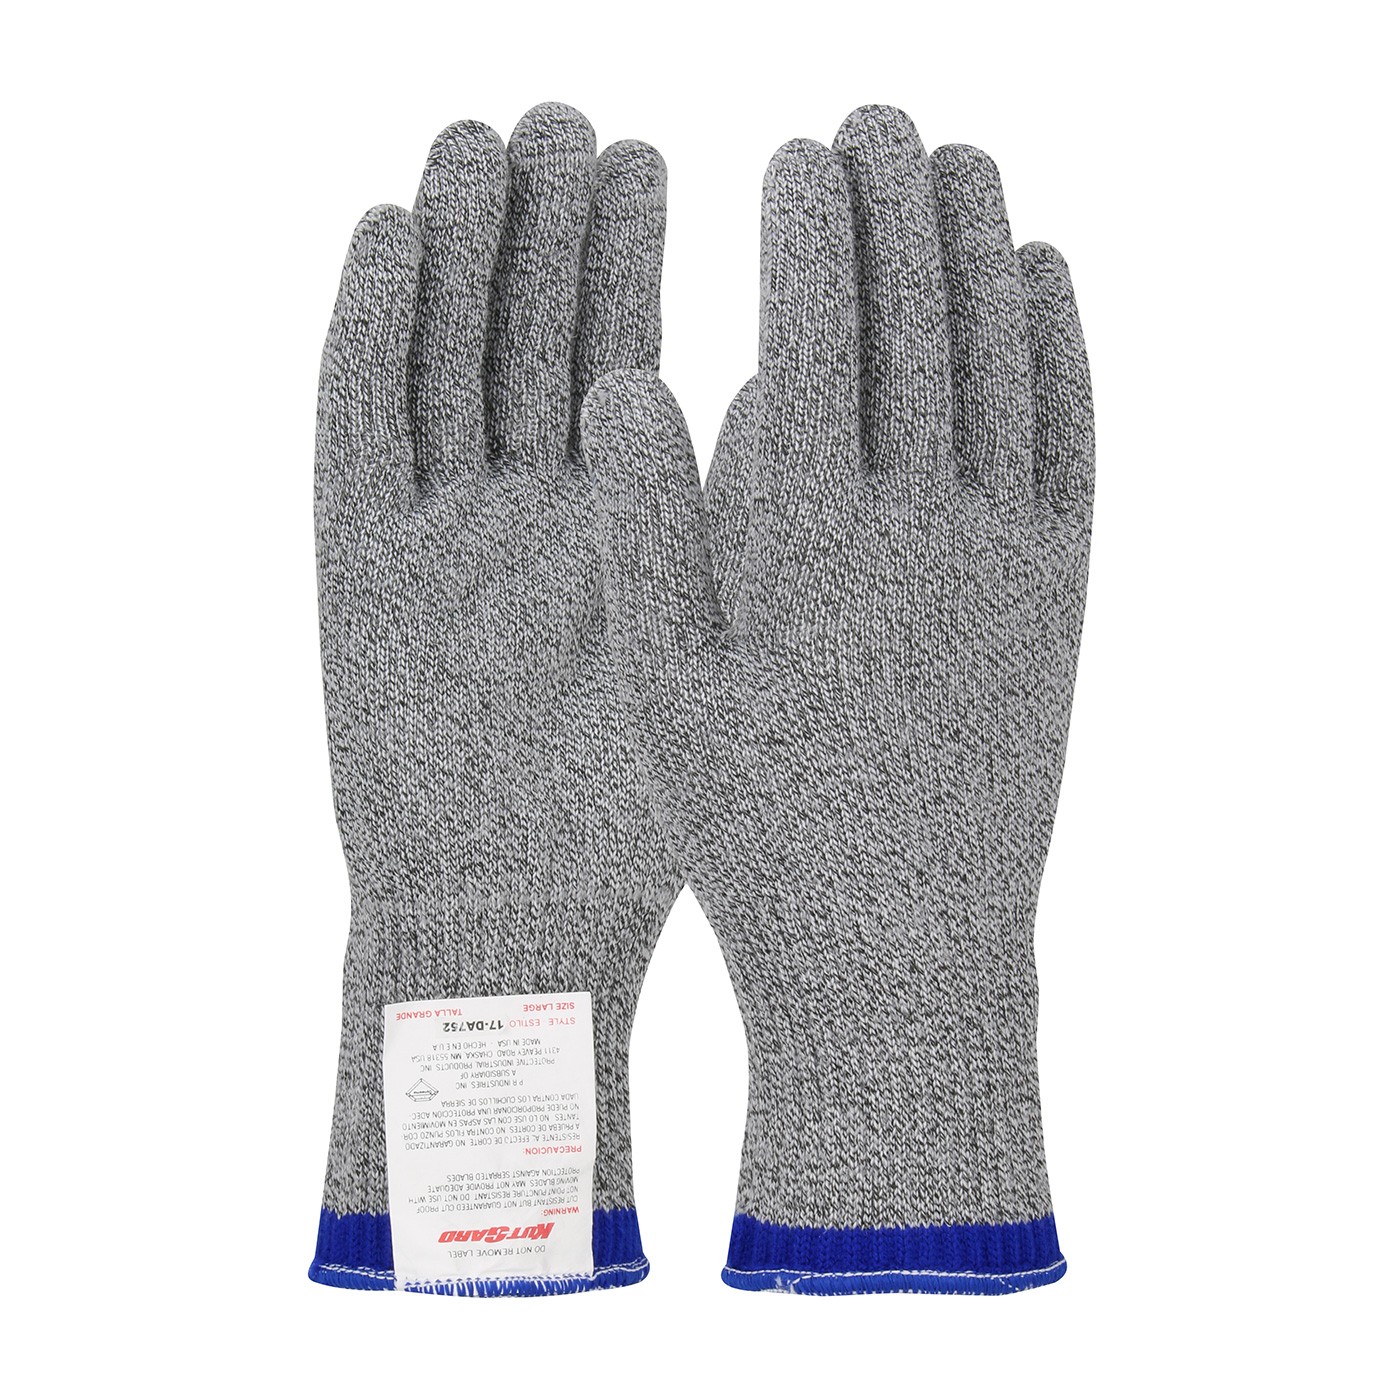 Kut Gard® Seamless Knit ACP / Dyneema® Blended Glove with Extended Cuff - Medium Weight  (#17-DA752)